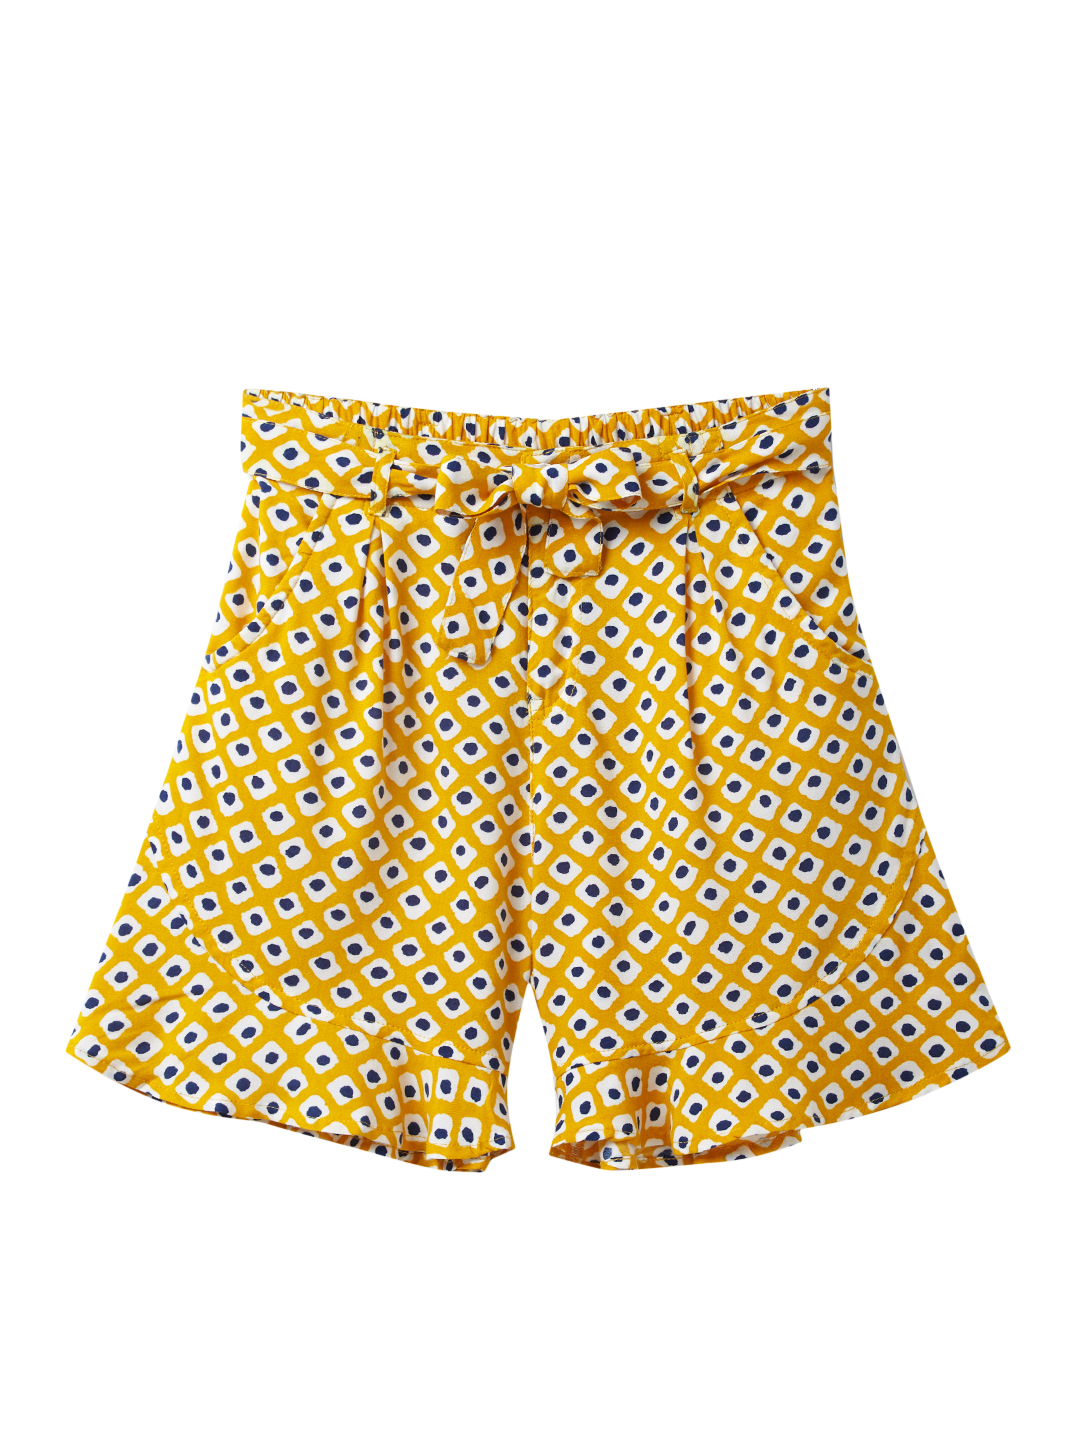 Girls Comfortable Yellow Shorts